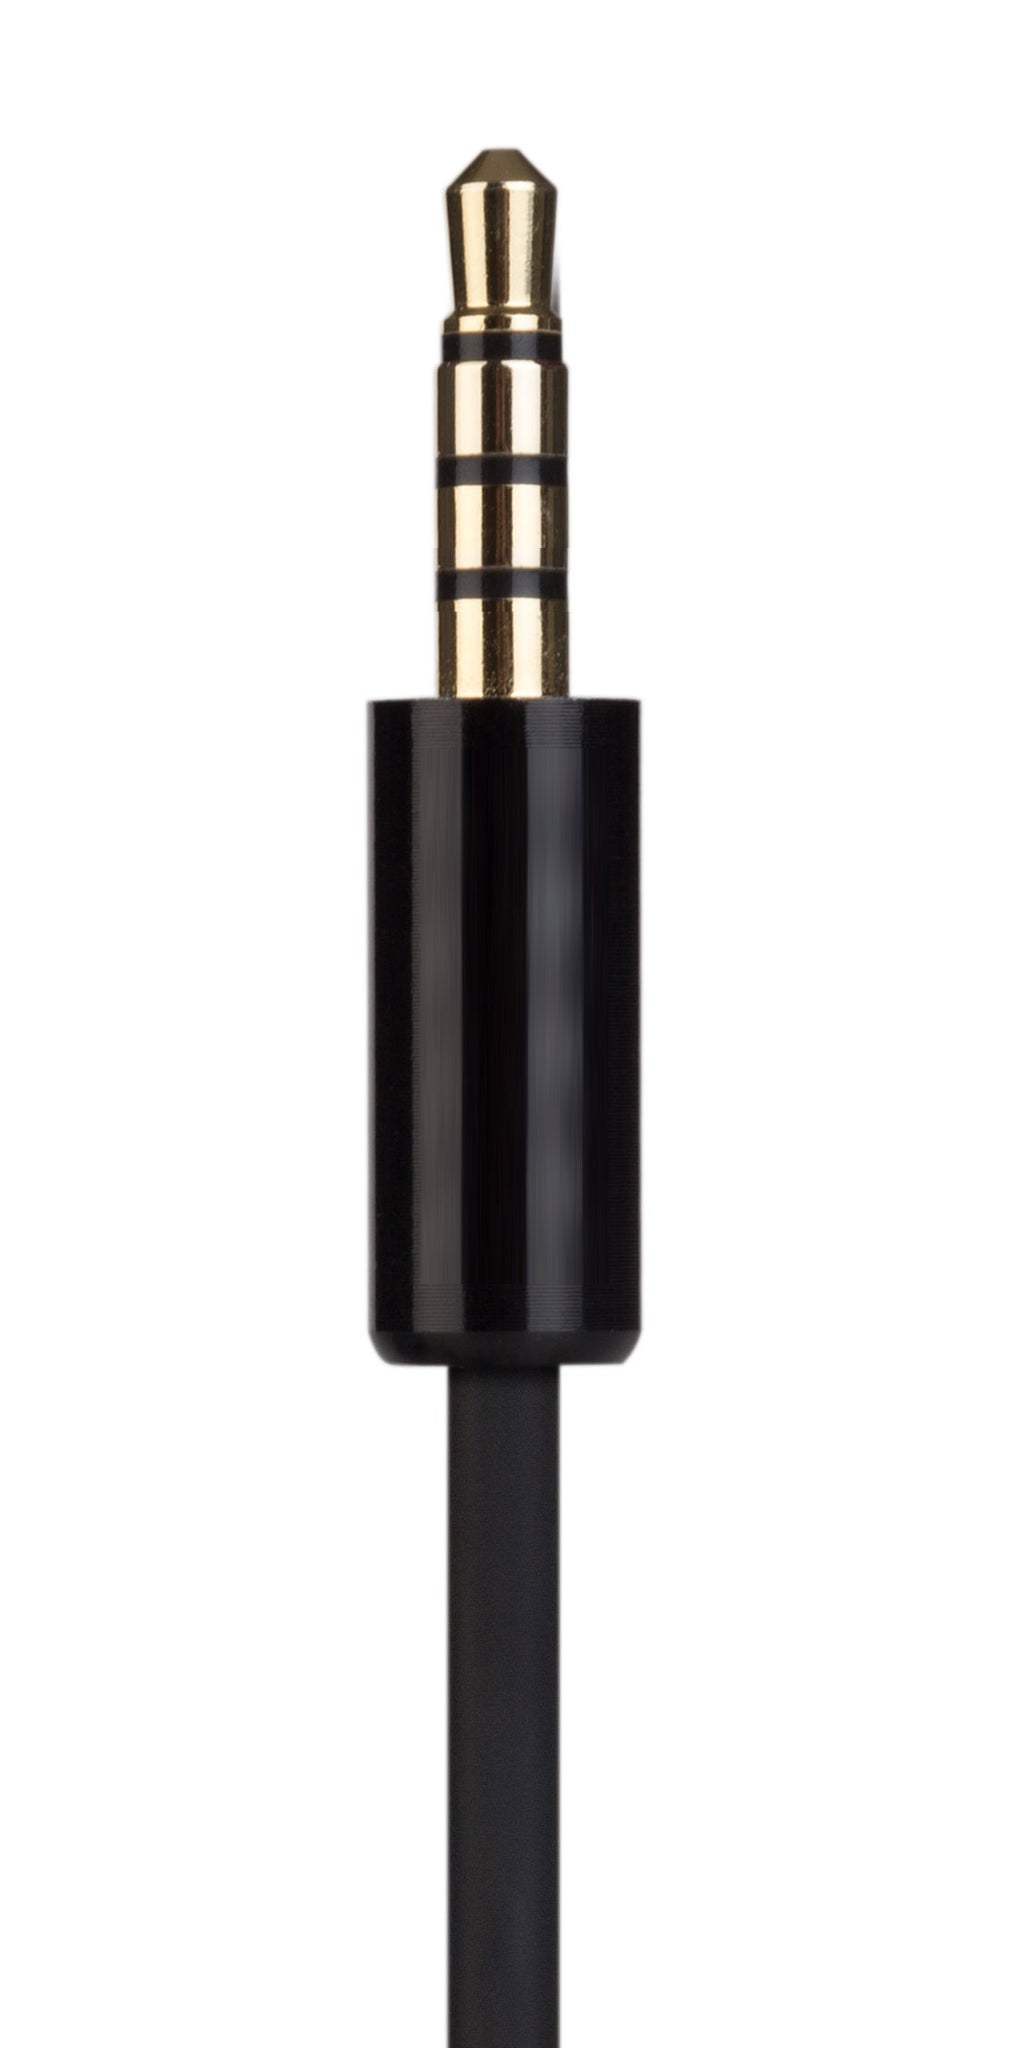 Edifier P841 Premium Headphones With Microphone - Black